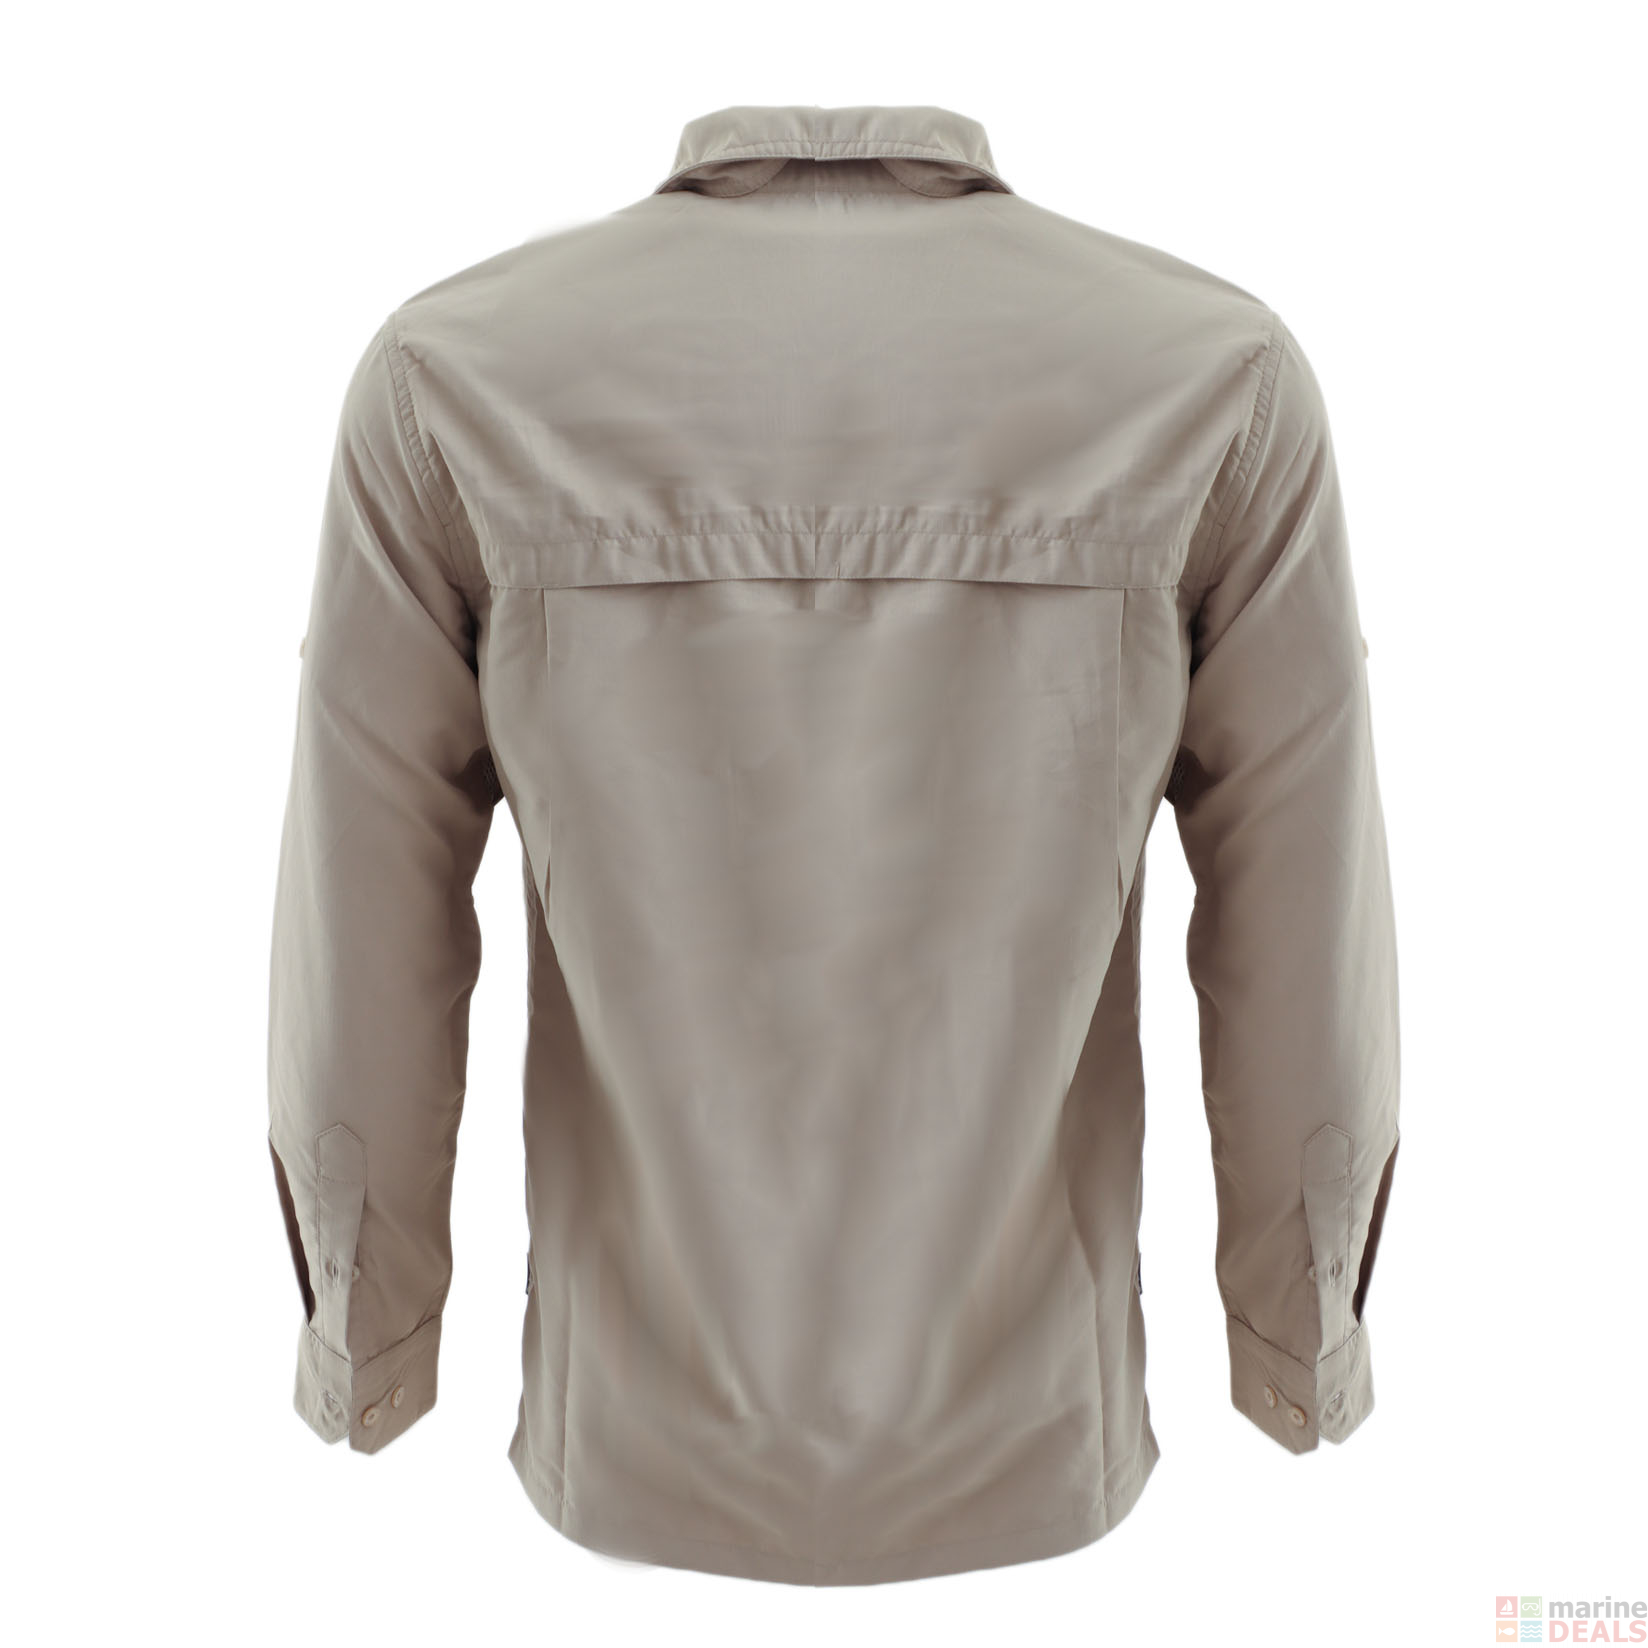 Buy Ridgeline Tacklure Long Sleeve Fishing Shirt Sand S online at ...